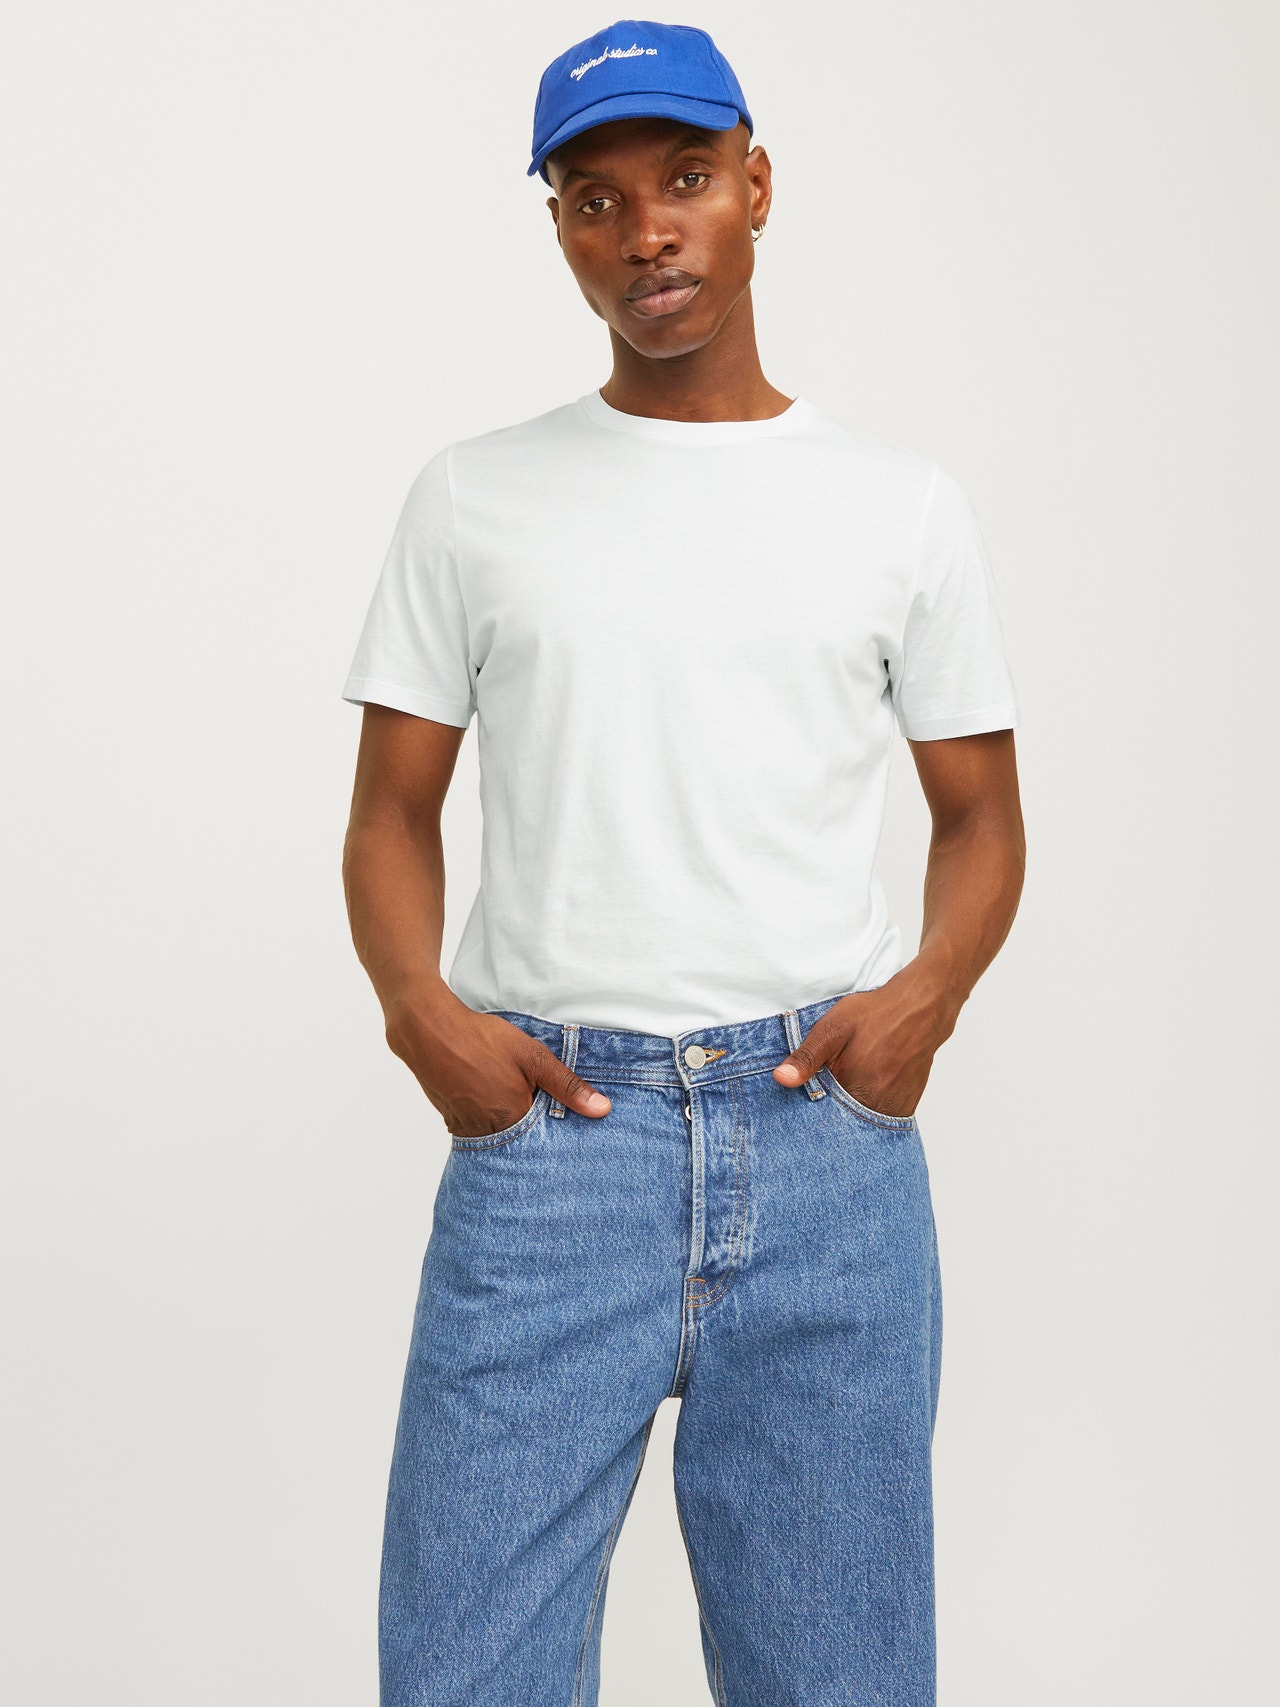 Cotton Short-Sleeved Crewneck - Men - Ready-to-Wear